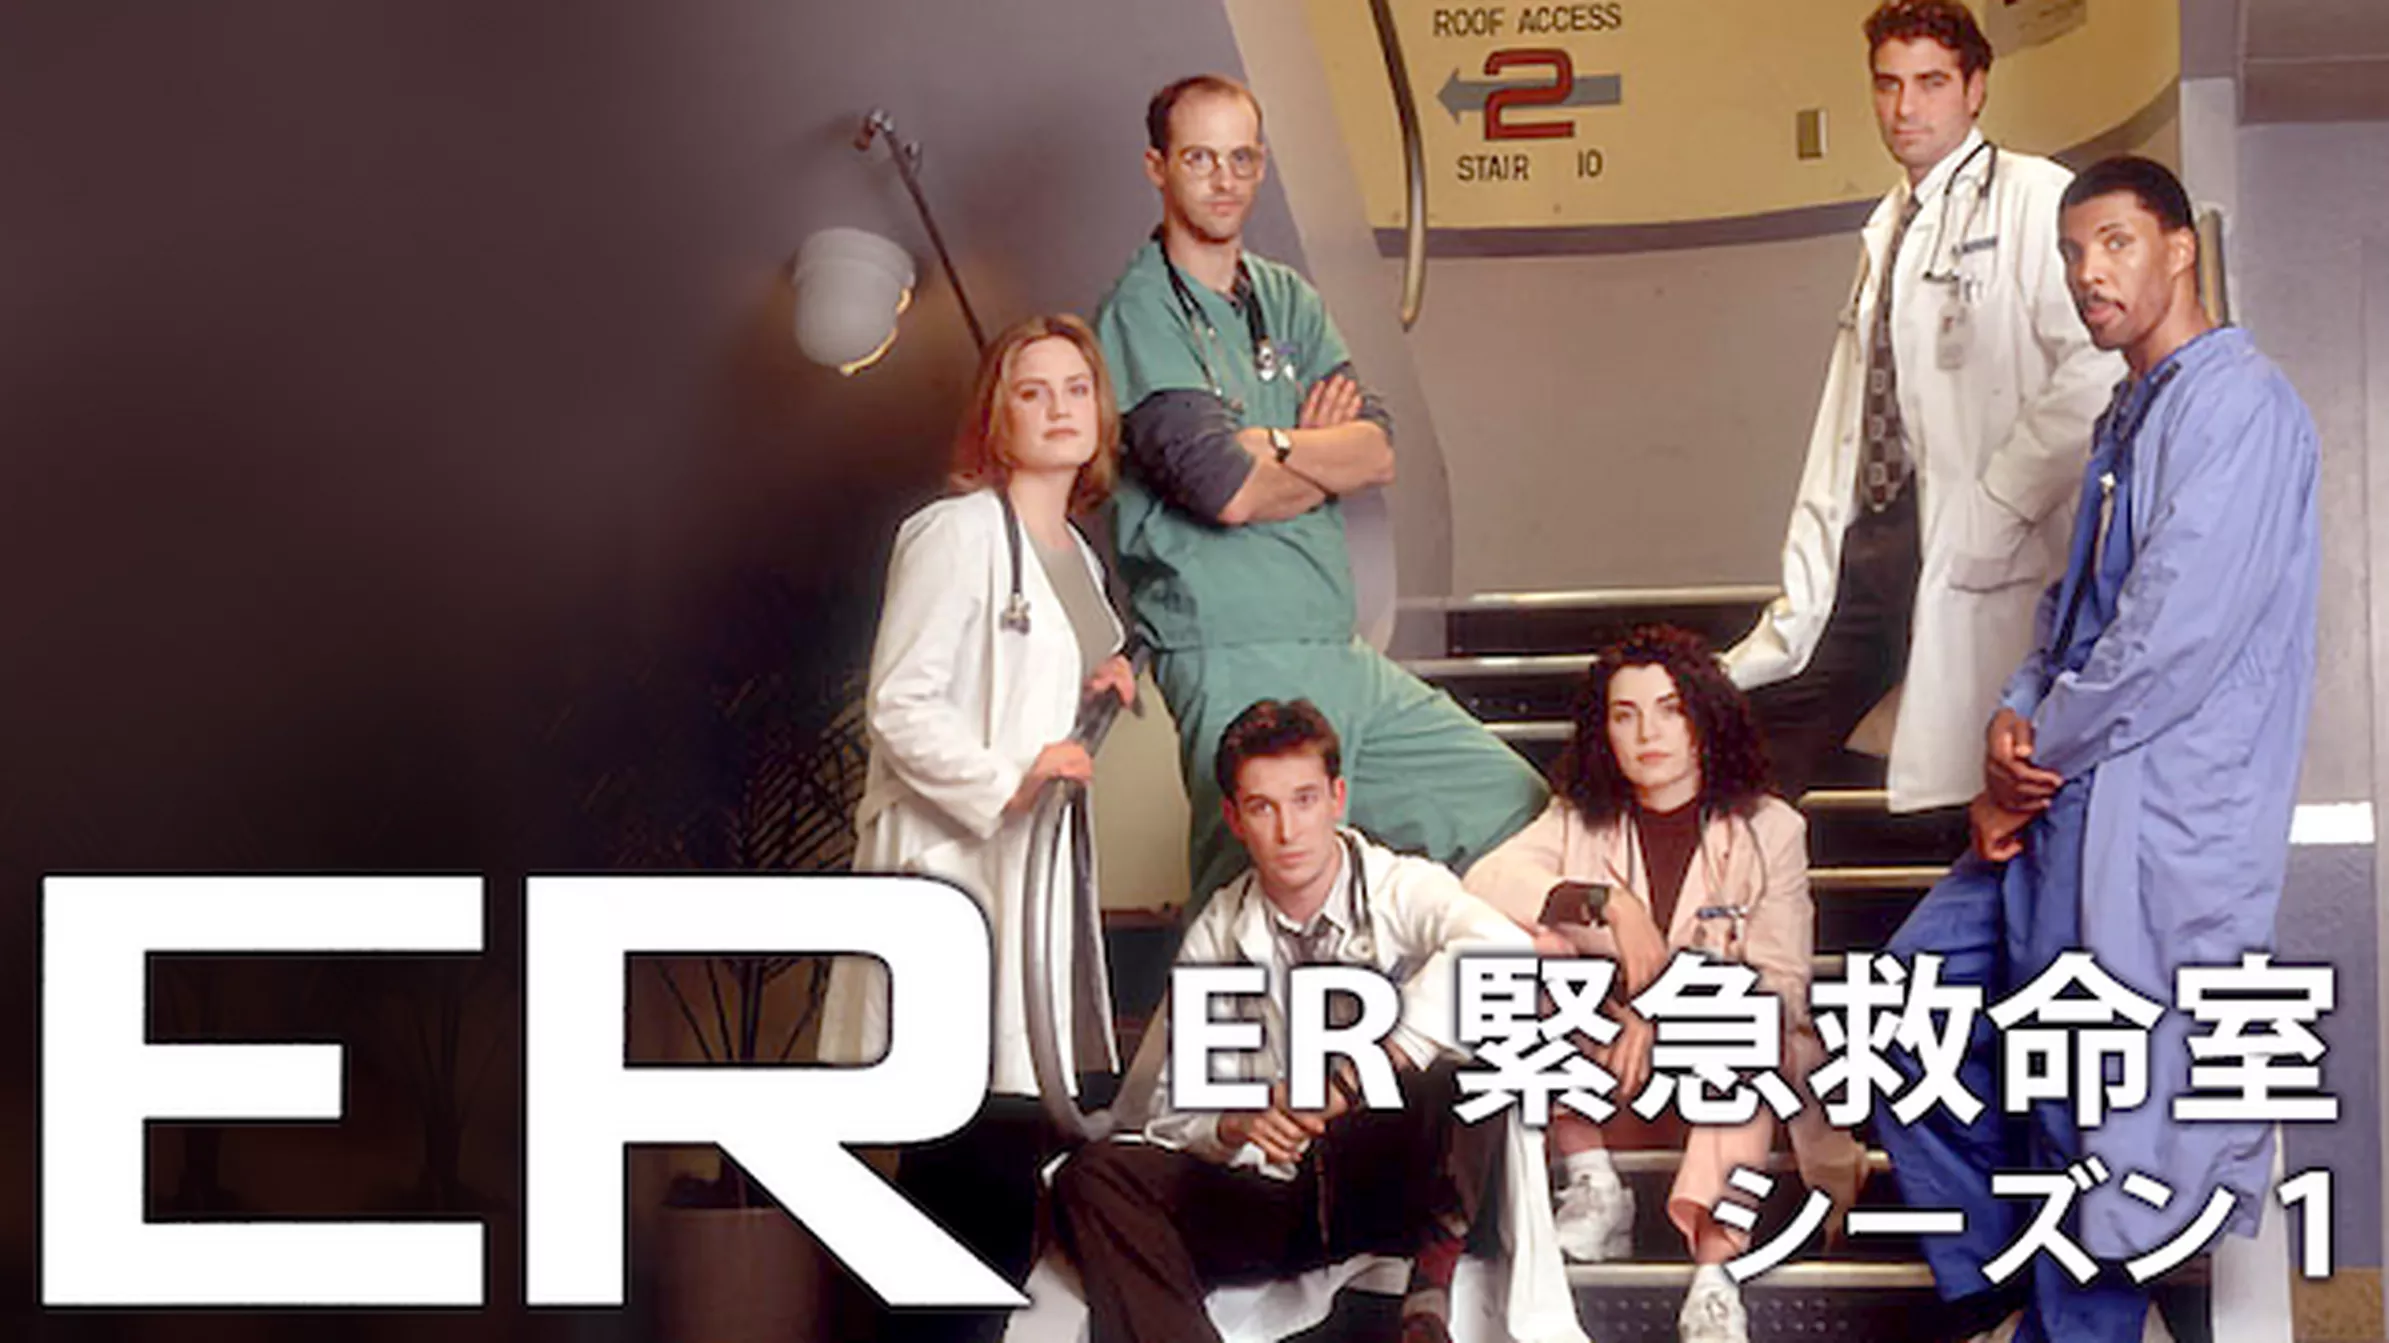 ER 緊急救命室 シーズン15(海外ドラマ / 2008) - 動画配信 | U-NEXT 31 